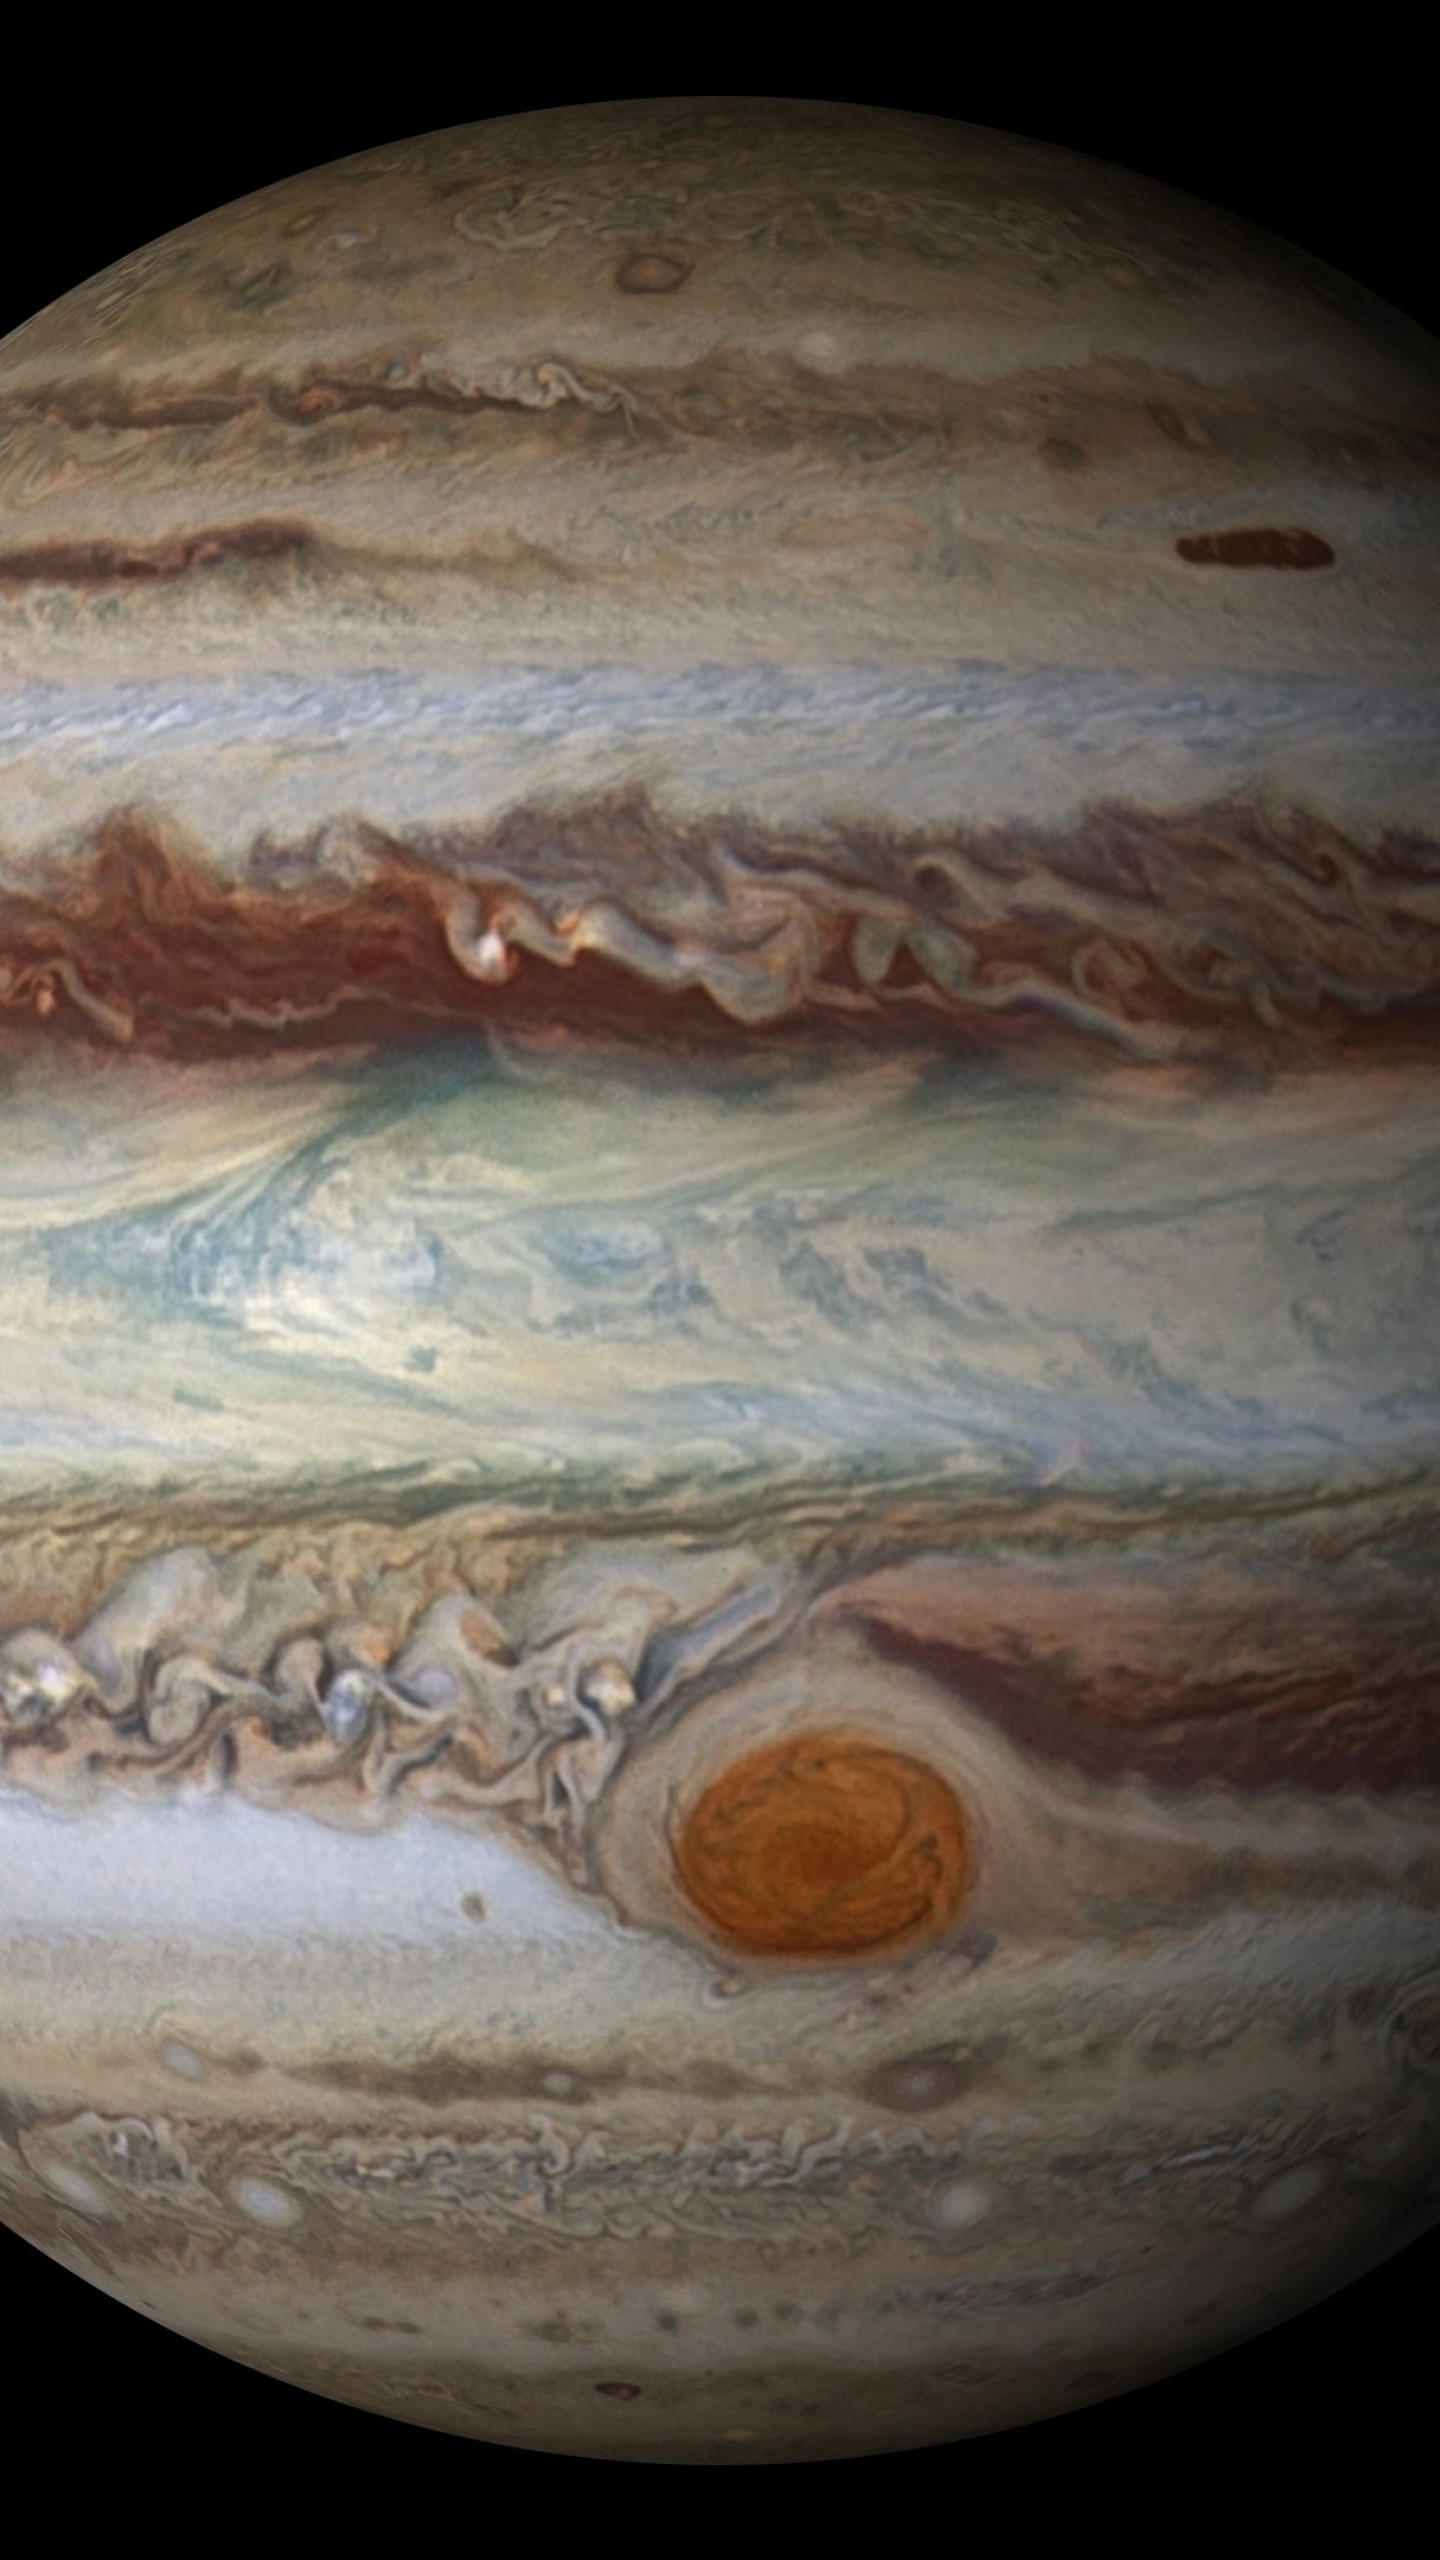 Wallpaper Jupiter, Juno, 4k, HD, NASA, space, photo, planet, Space #13549